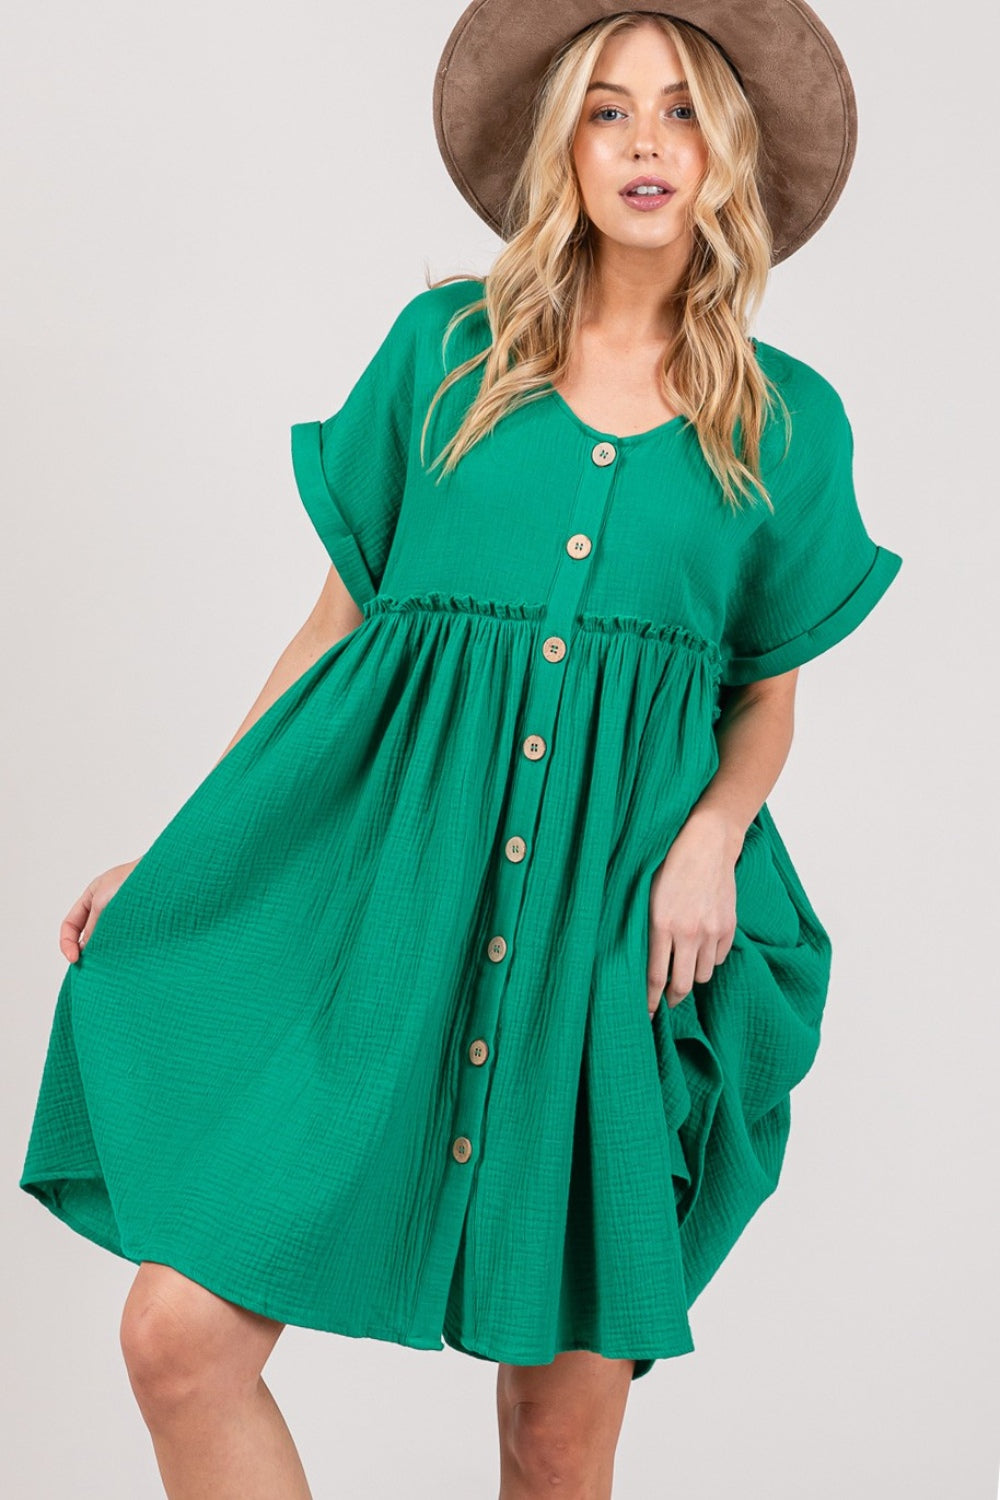 TEEK - Kelly Green Button Up Short Sleeve Dress DRESS TEEK Trend S  